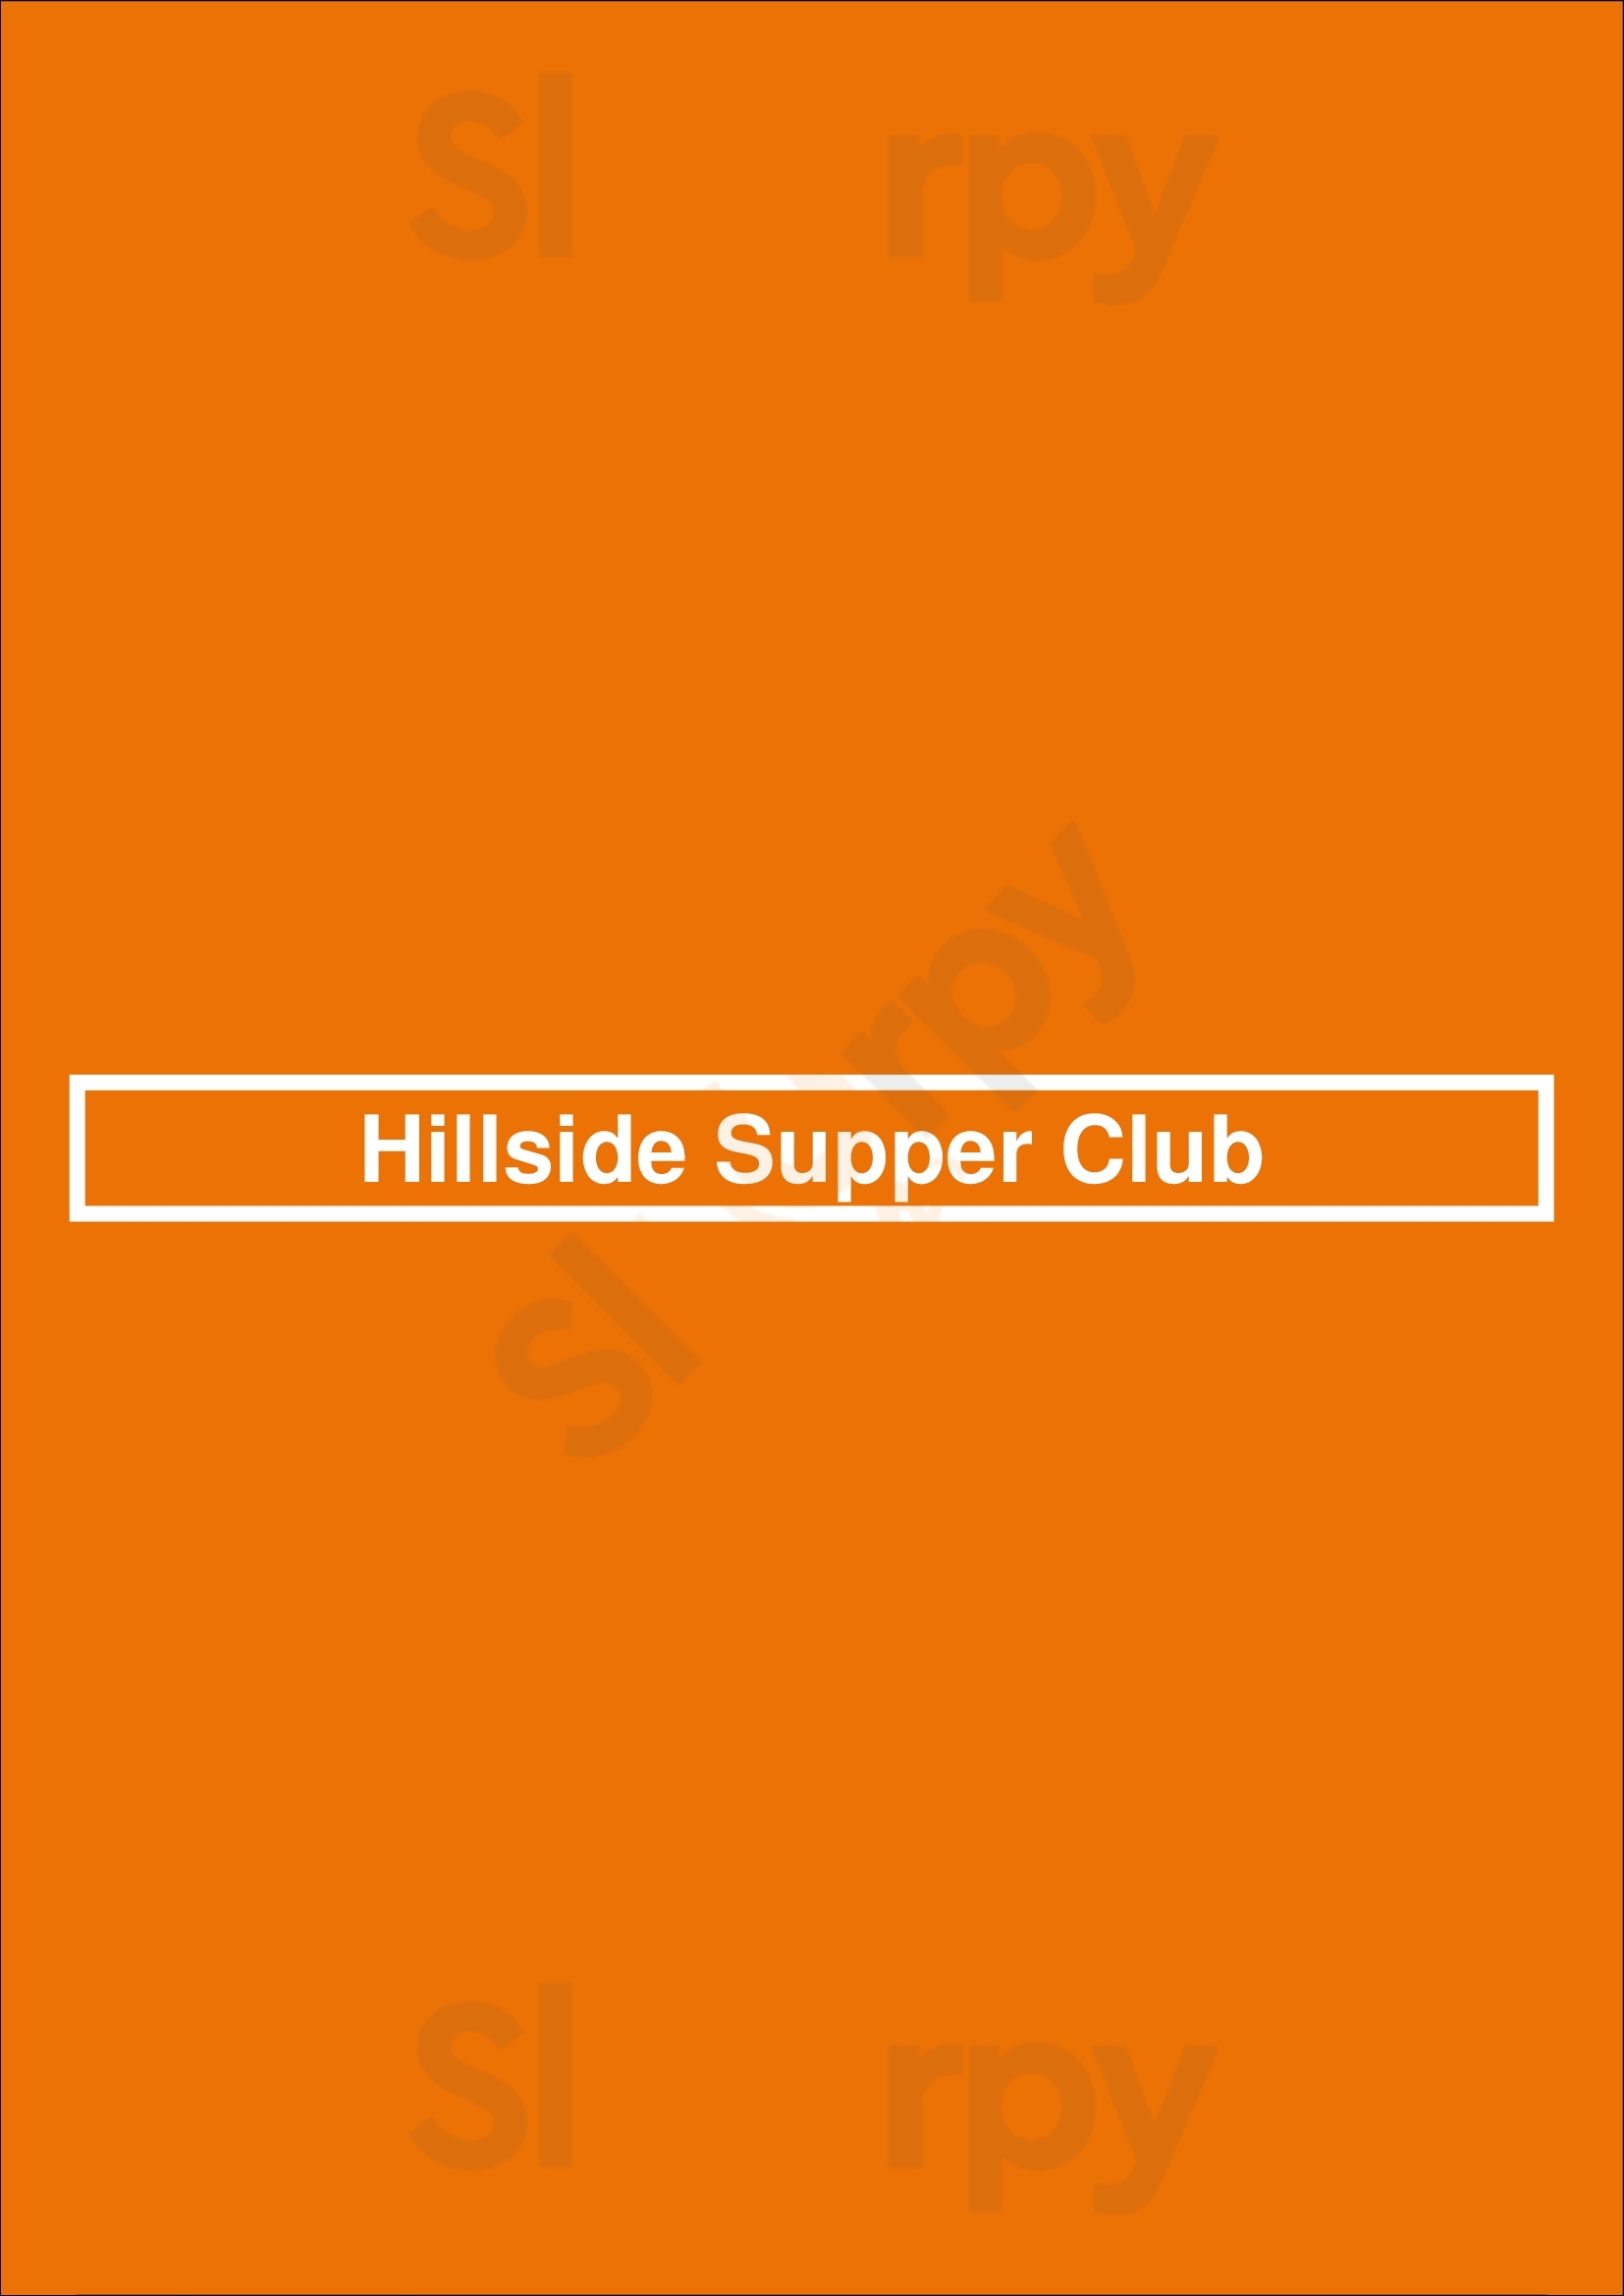 Hillside Supper Club San Francisco Menu - 1